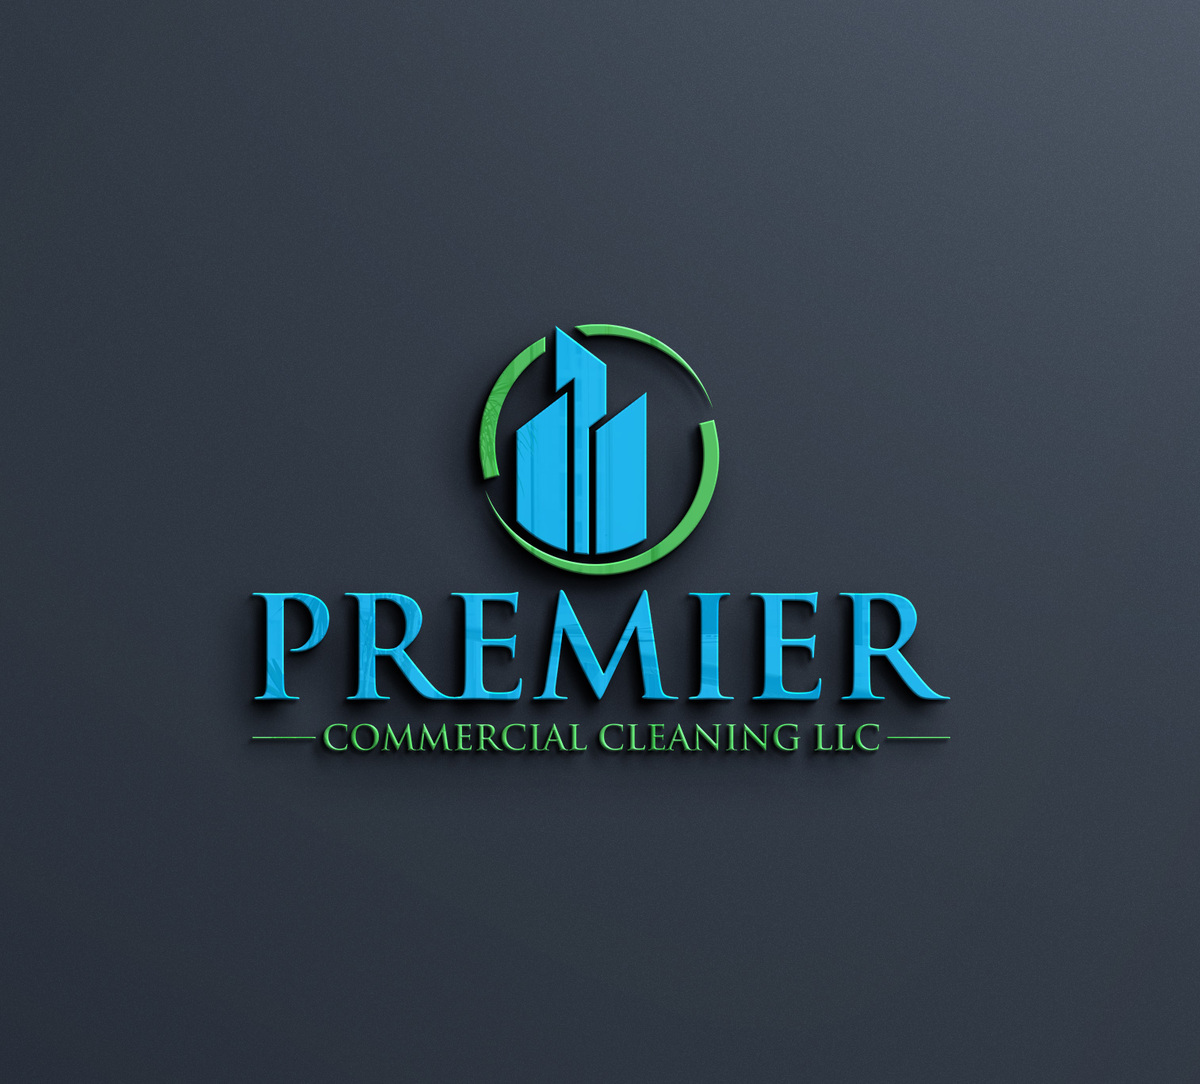 Premier Commercial Cleaning LLC Logo